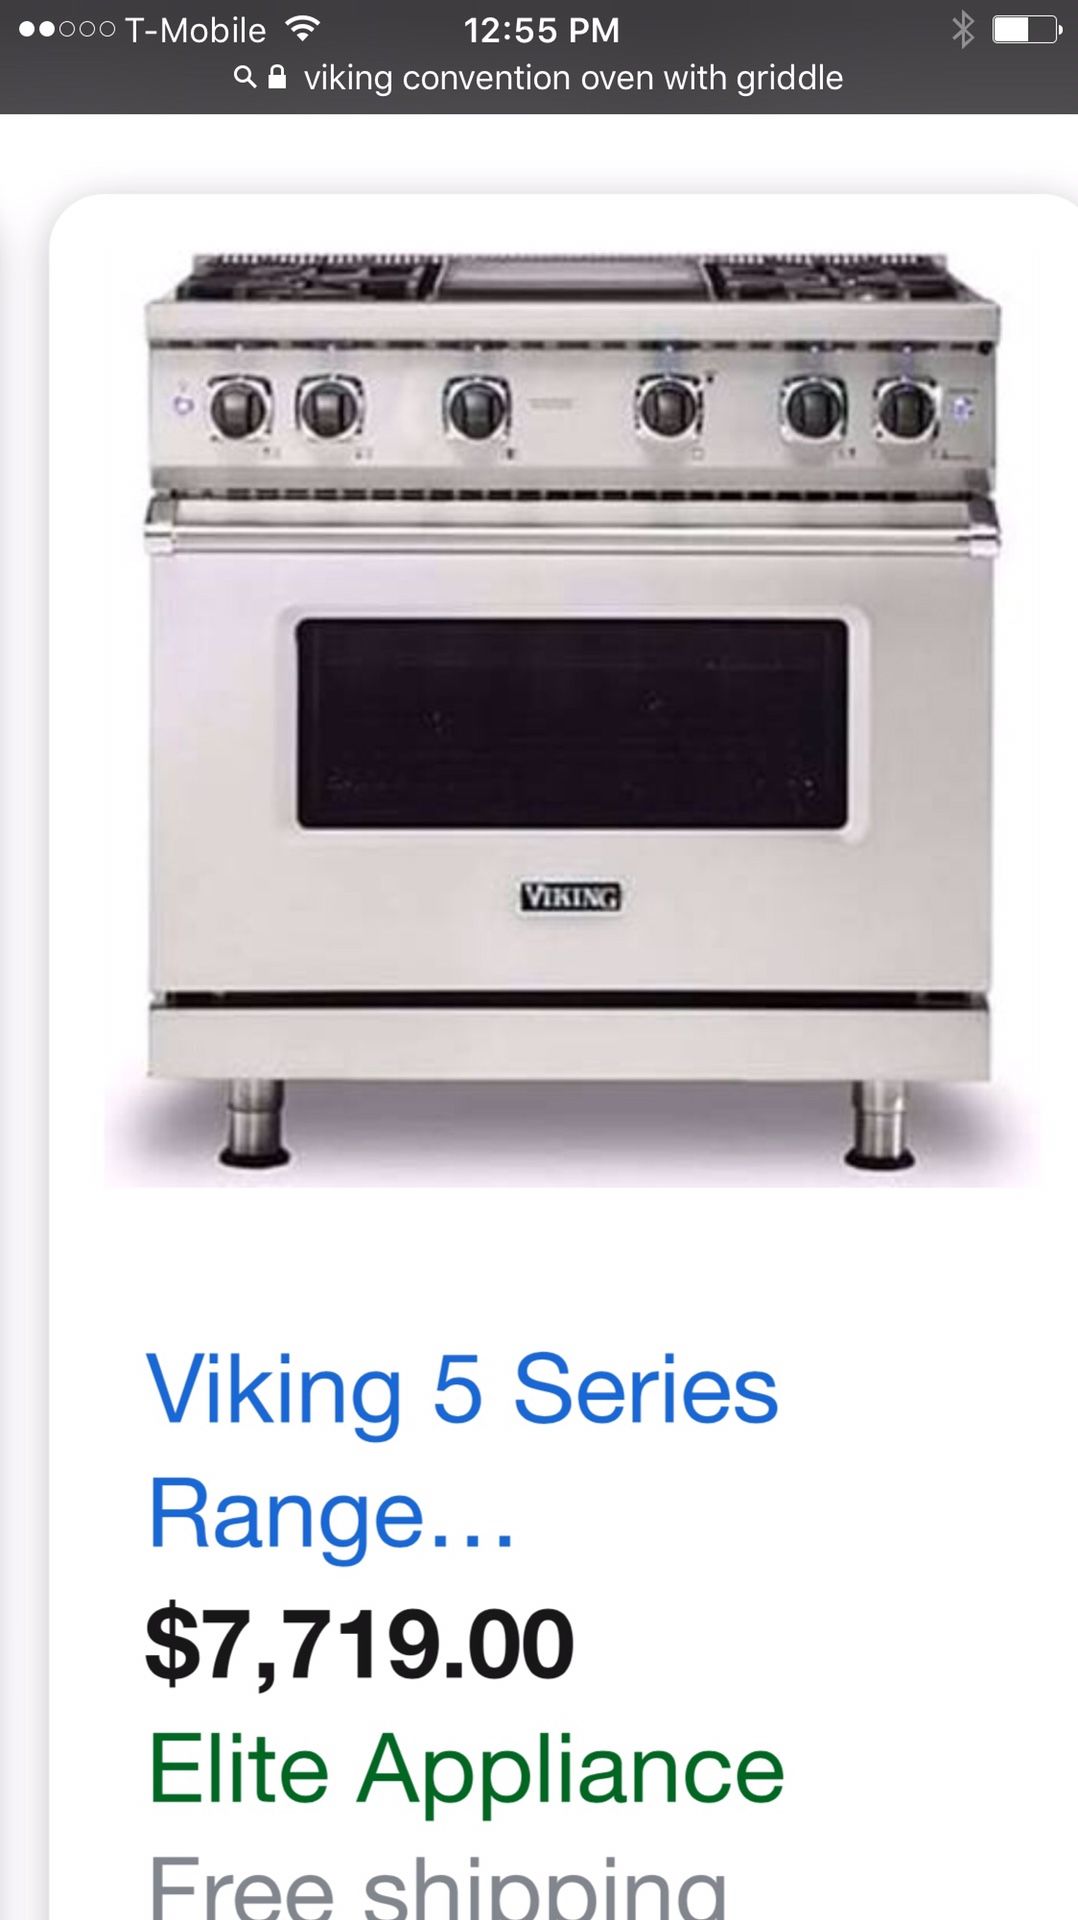 Viking elite appliance